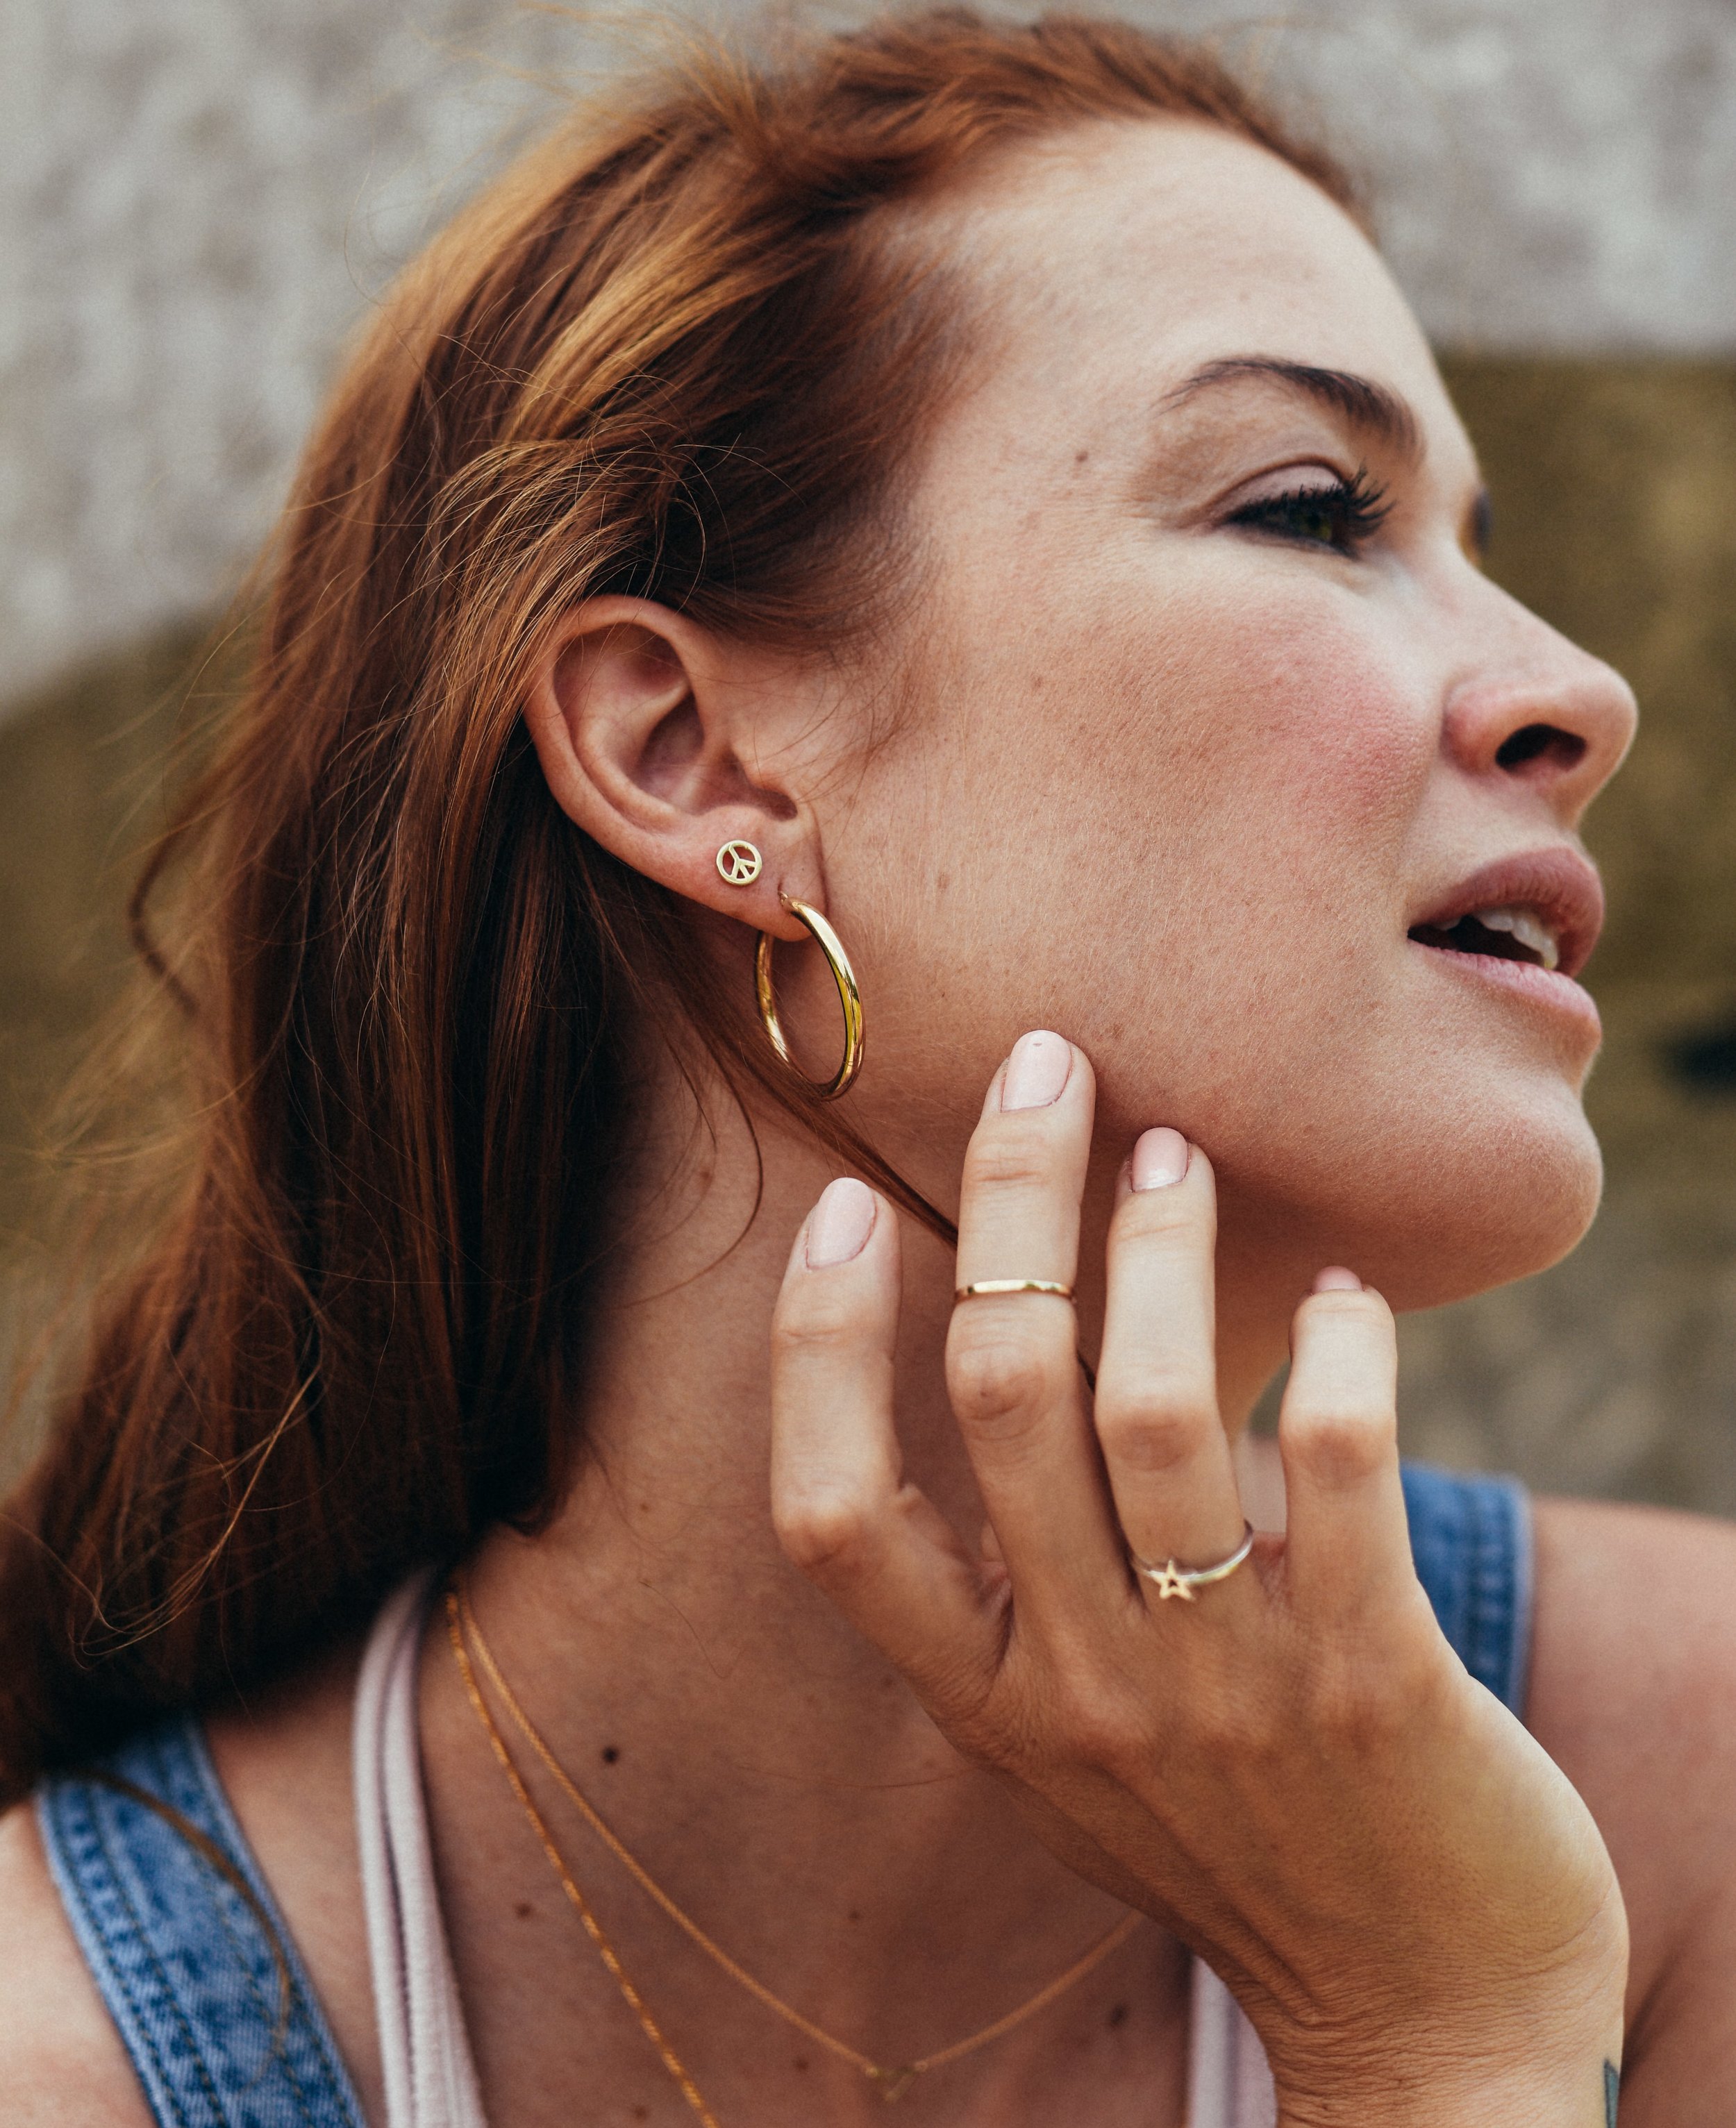 Discover more than 200 star model earrings